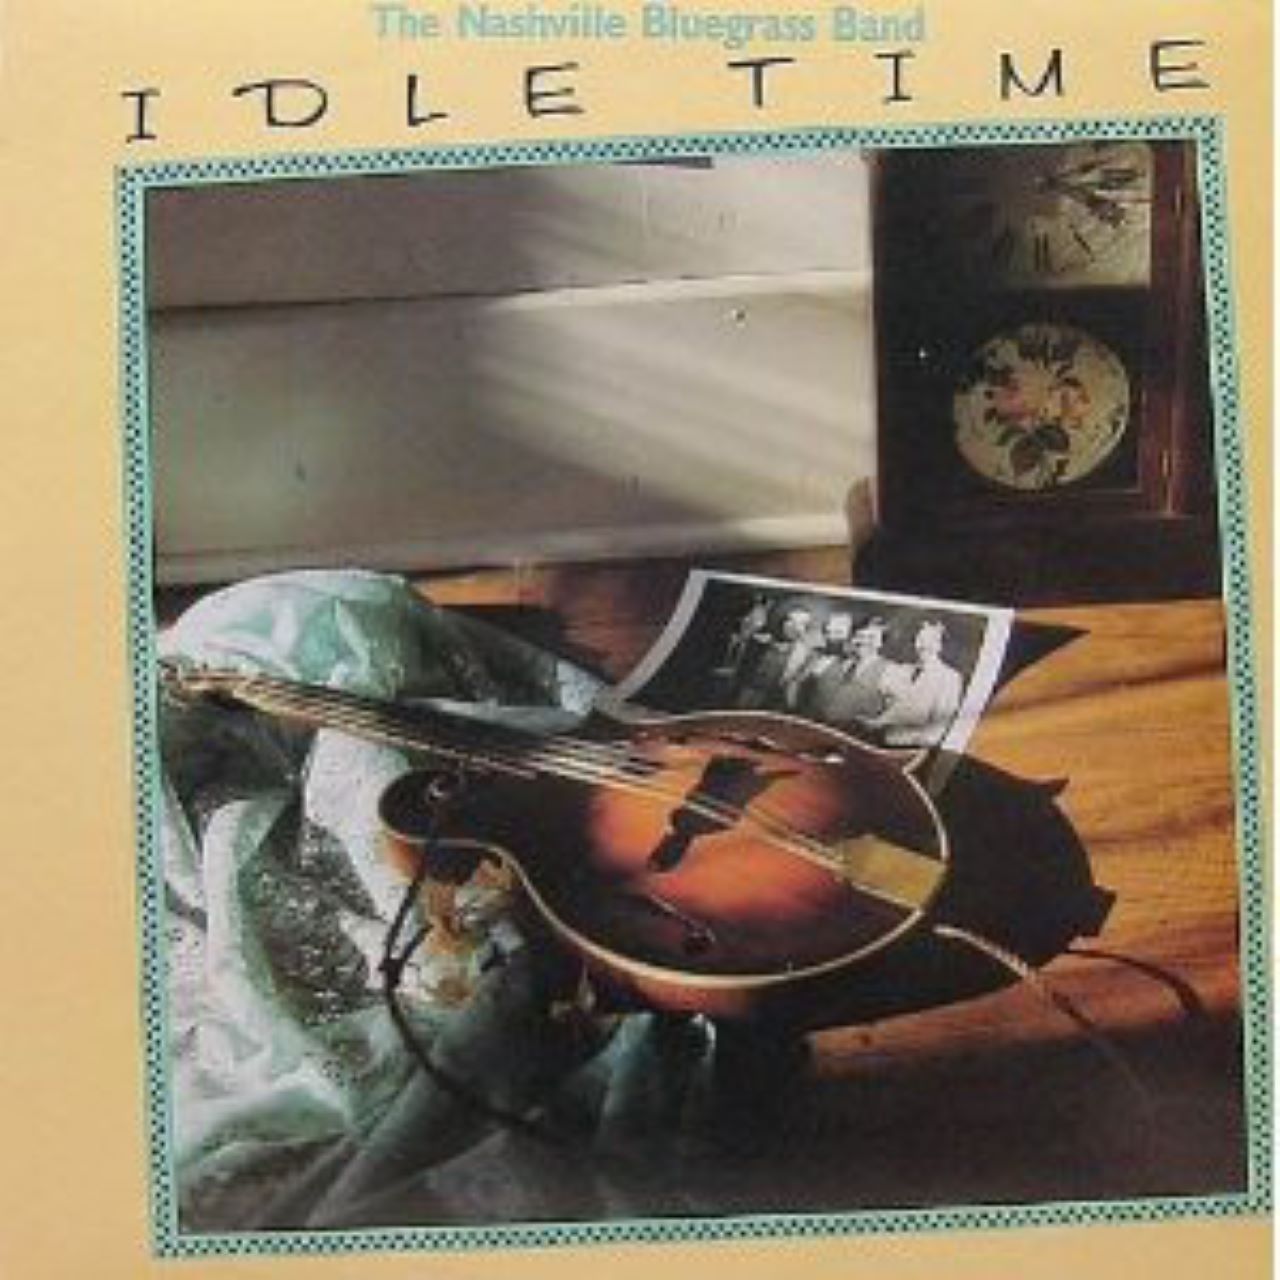 Nashville Bluegrass Band - Idle Time cover album